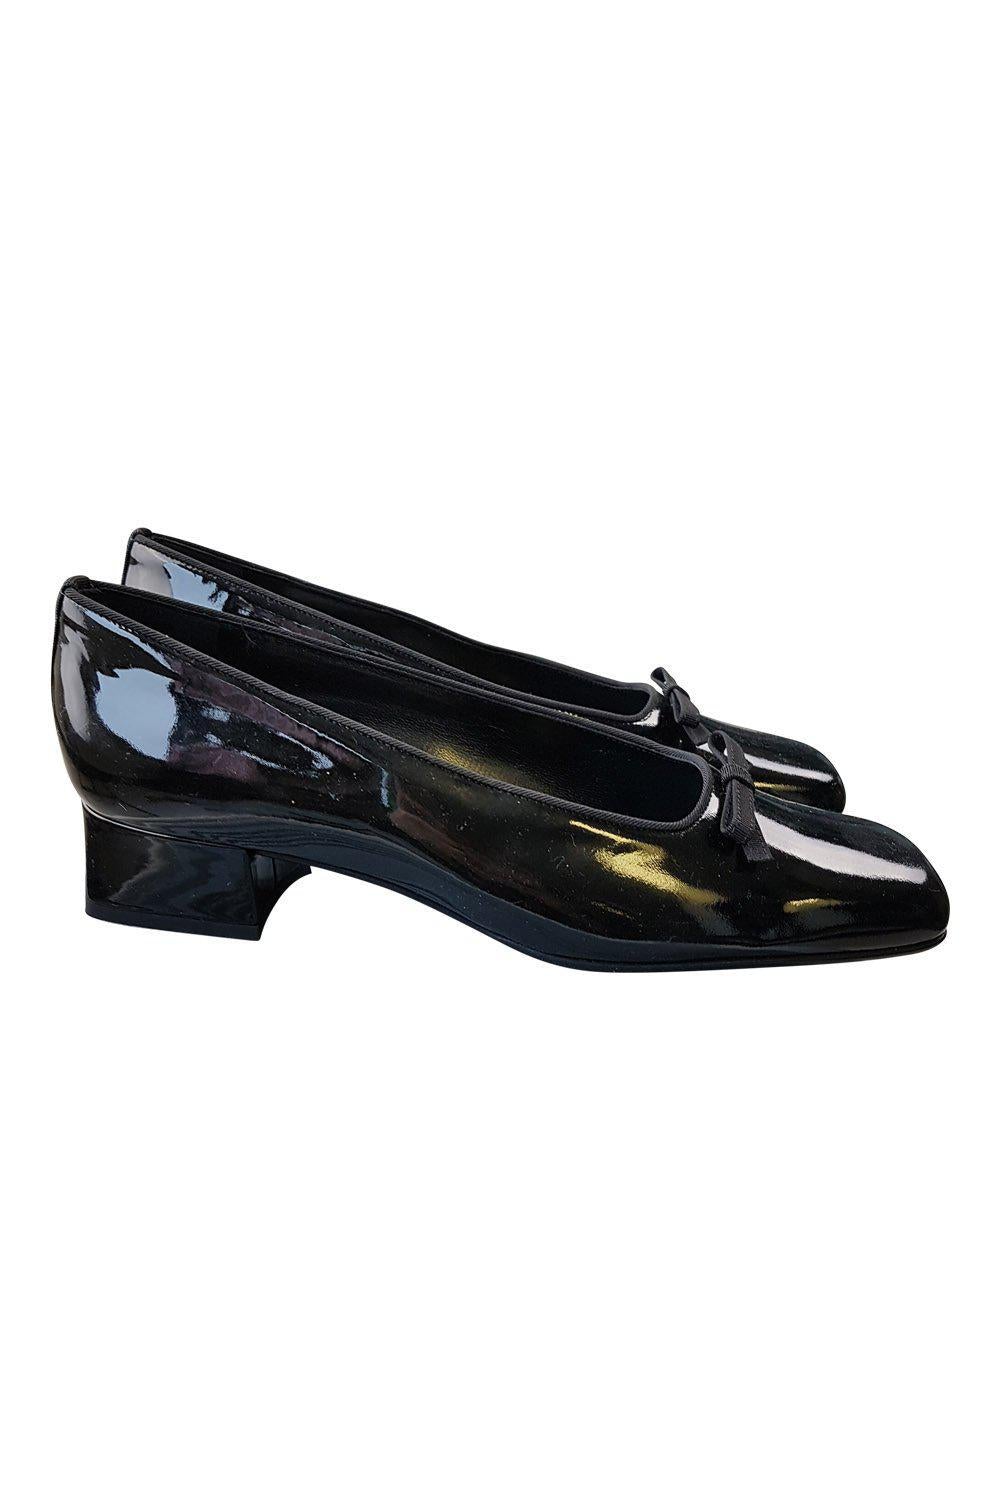 SERGIO ROSSI Black Patent Leather Kitten Heel Pumps (39.5)-Sergio Rossi-The Freperie